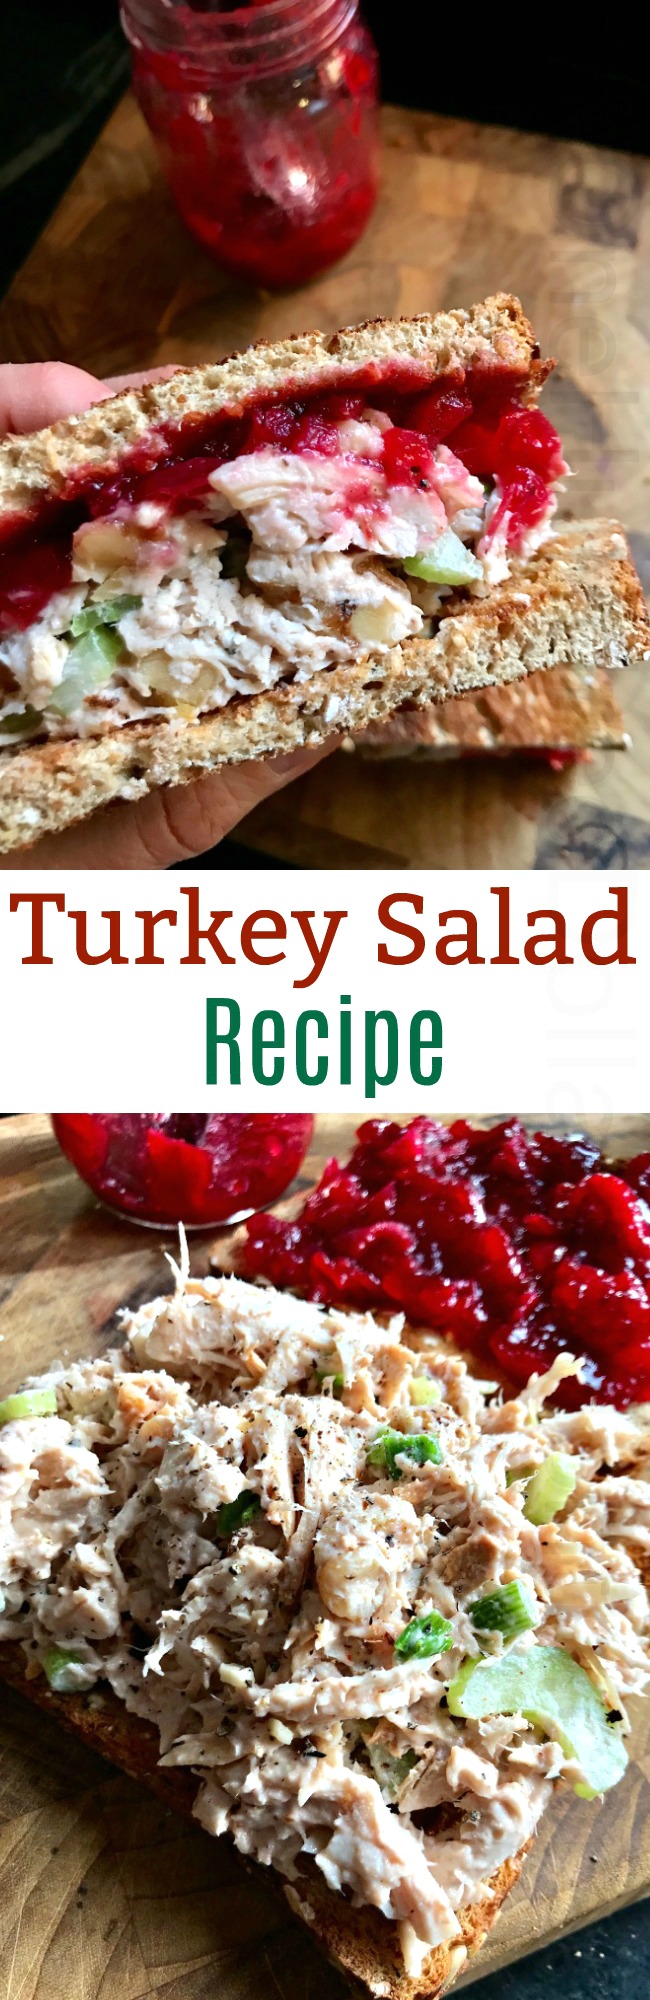 Turkey Salad Recipe – PERFECT for Sandwiches!